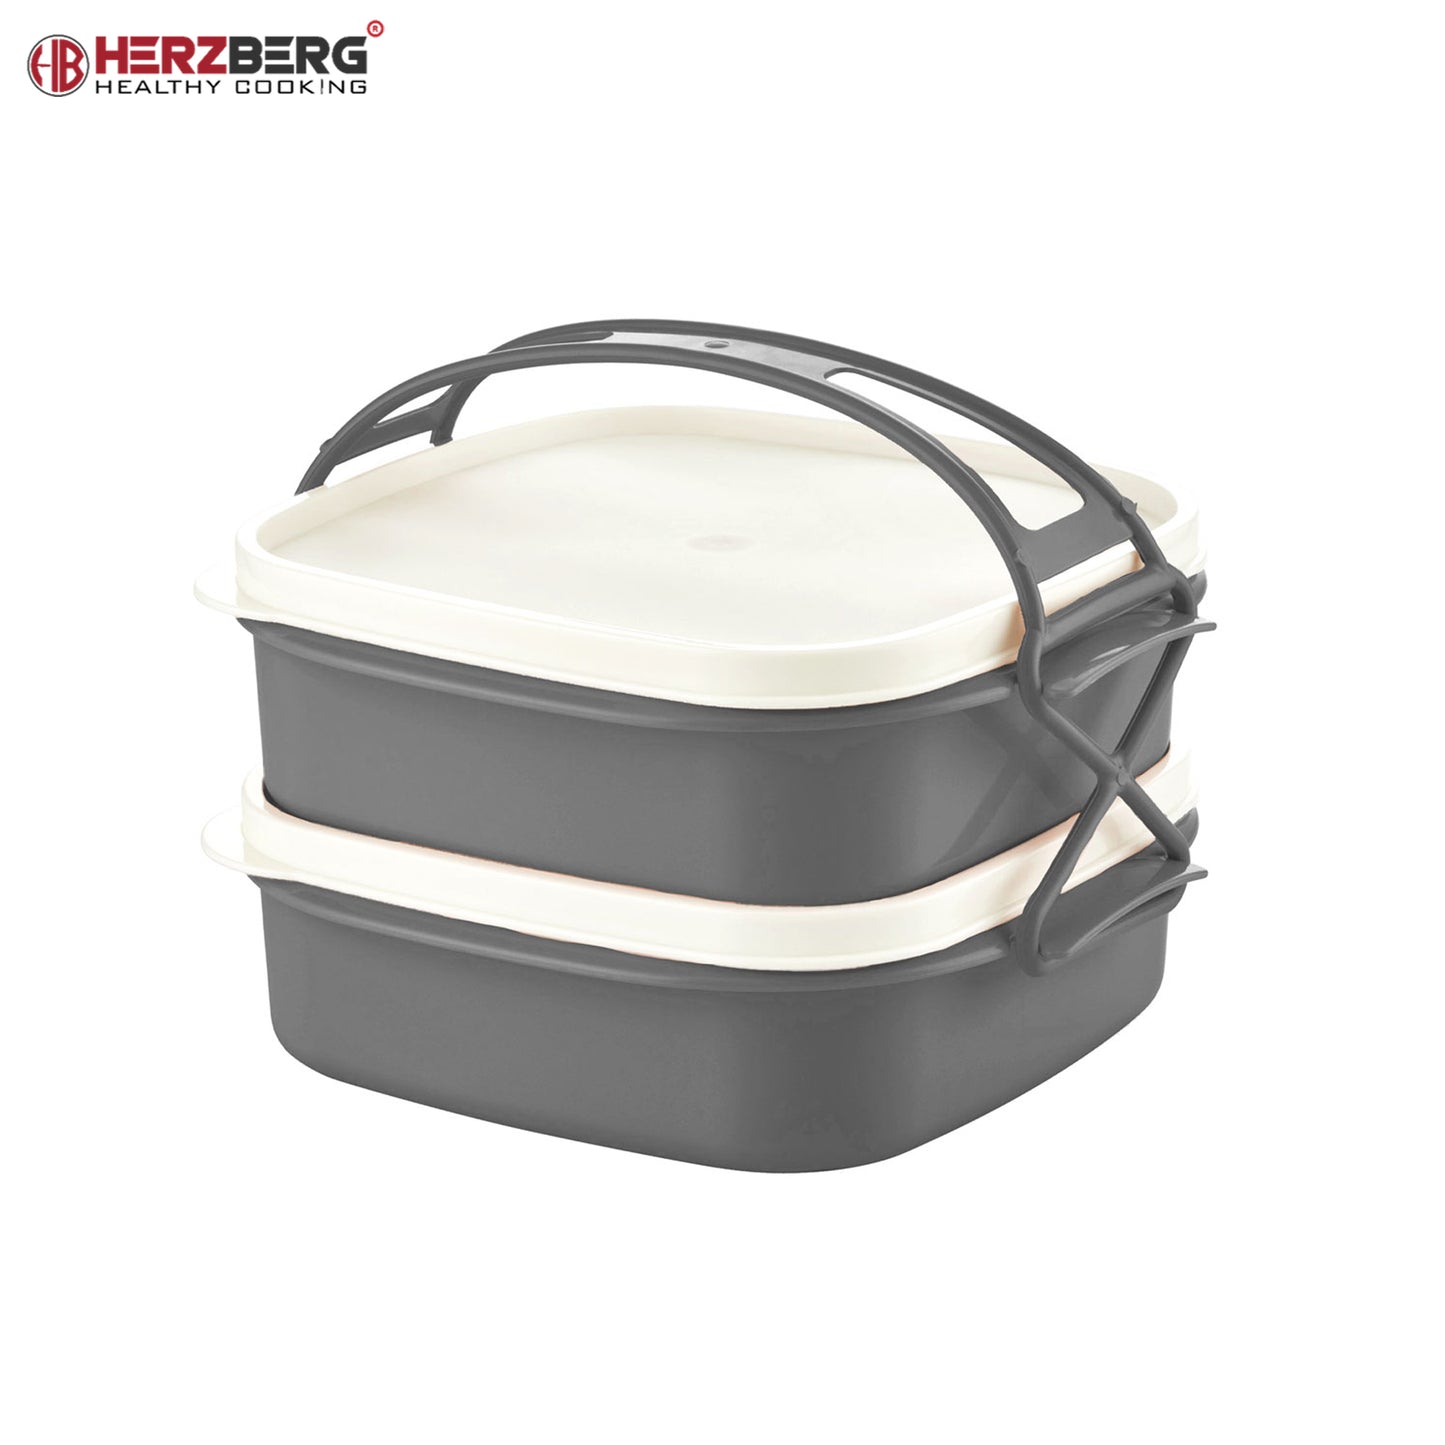 Herzberg 2-Layer Tetra Lunch Box